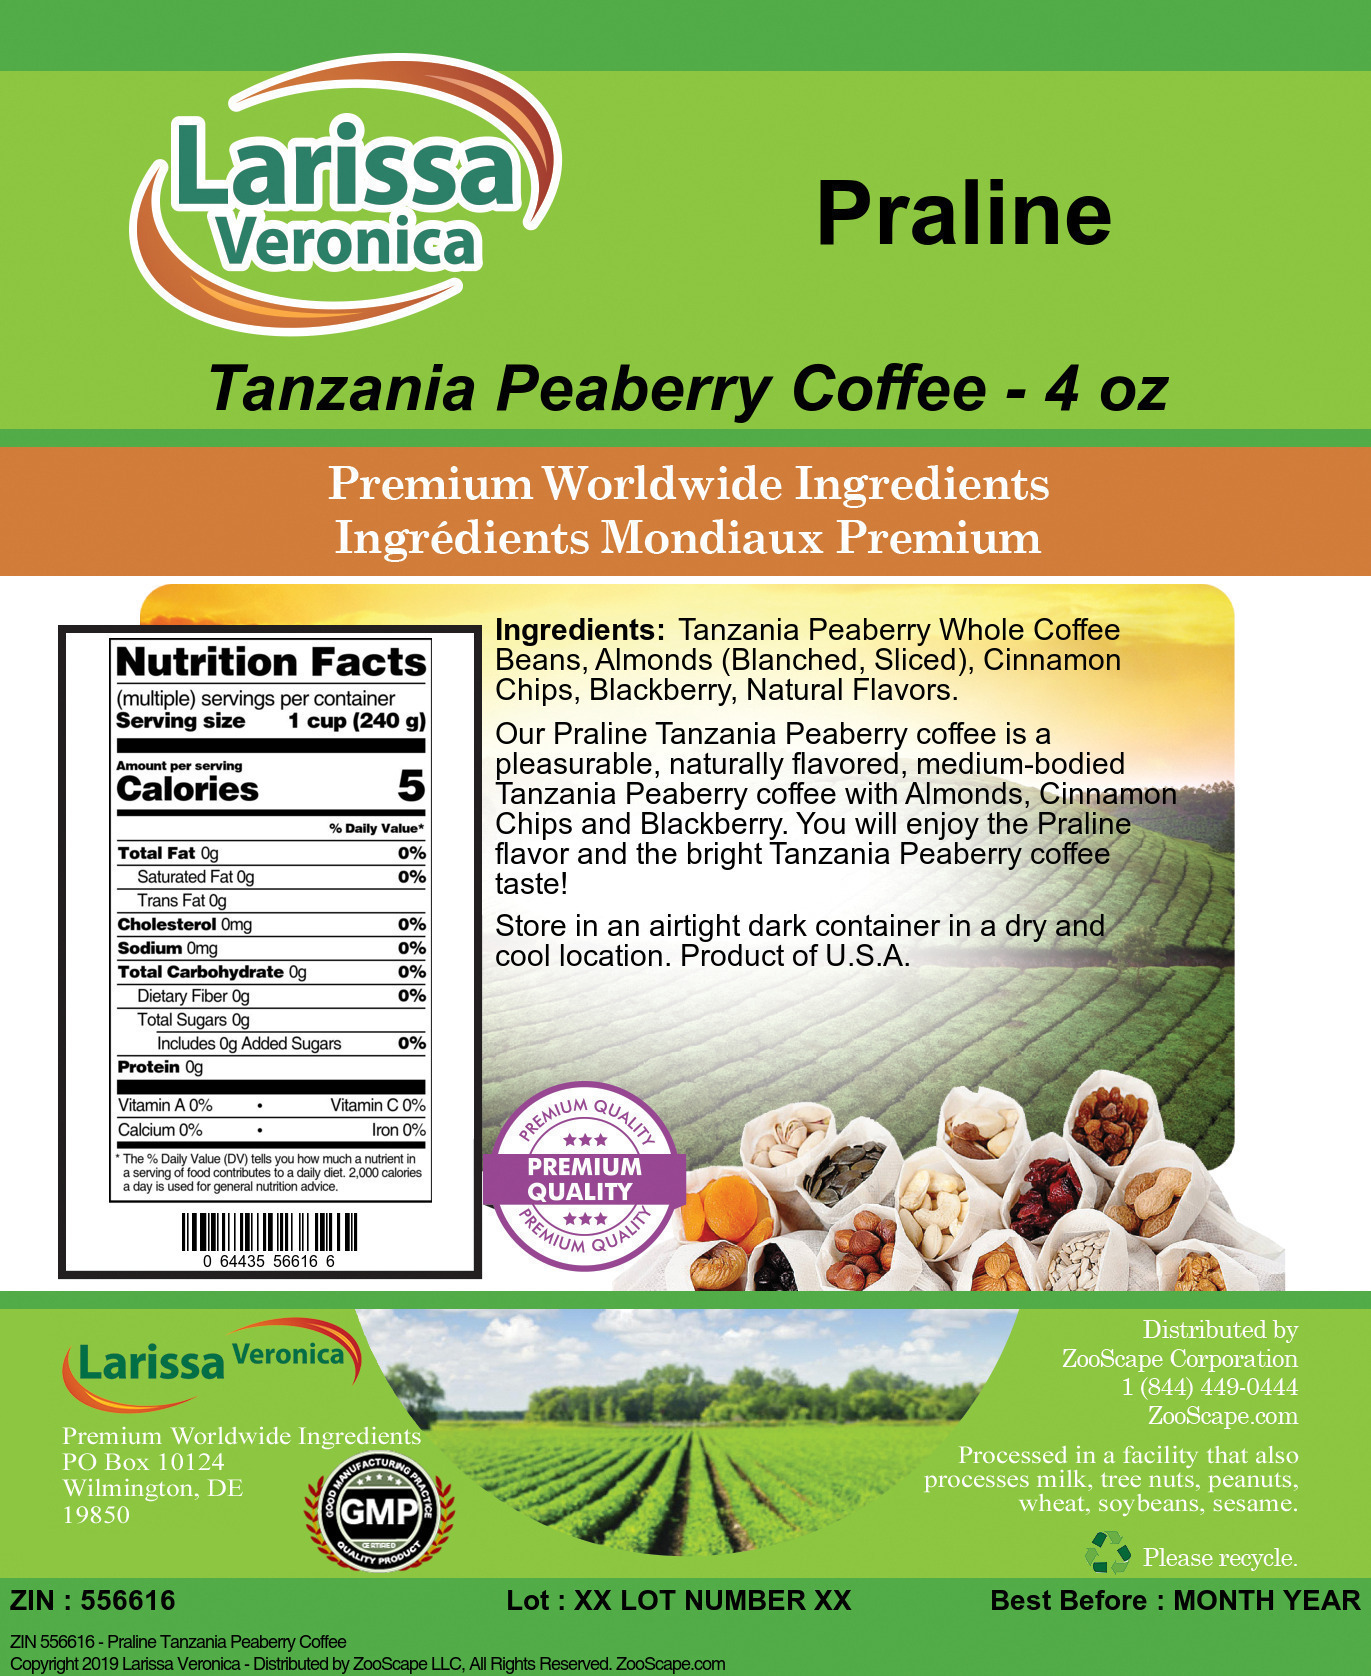 Praline Tanzania Peaberry Coffee - Label